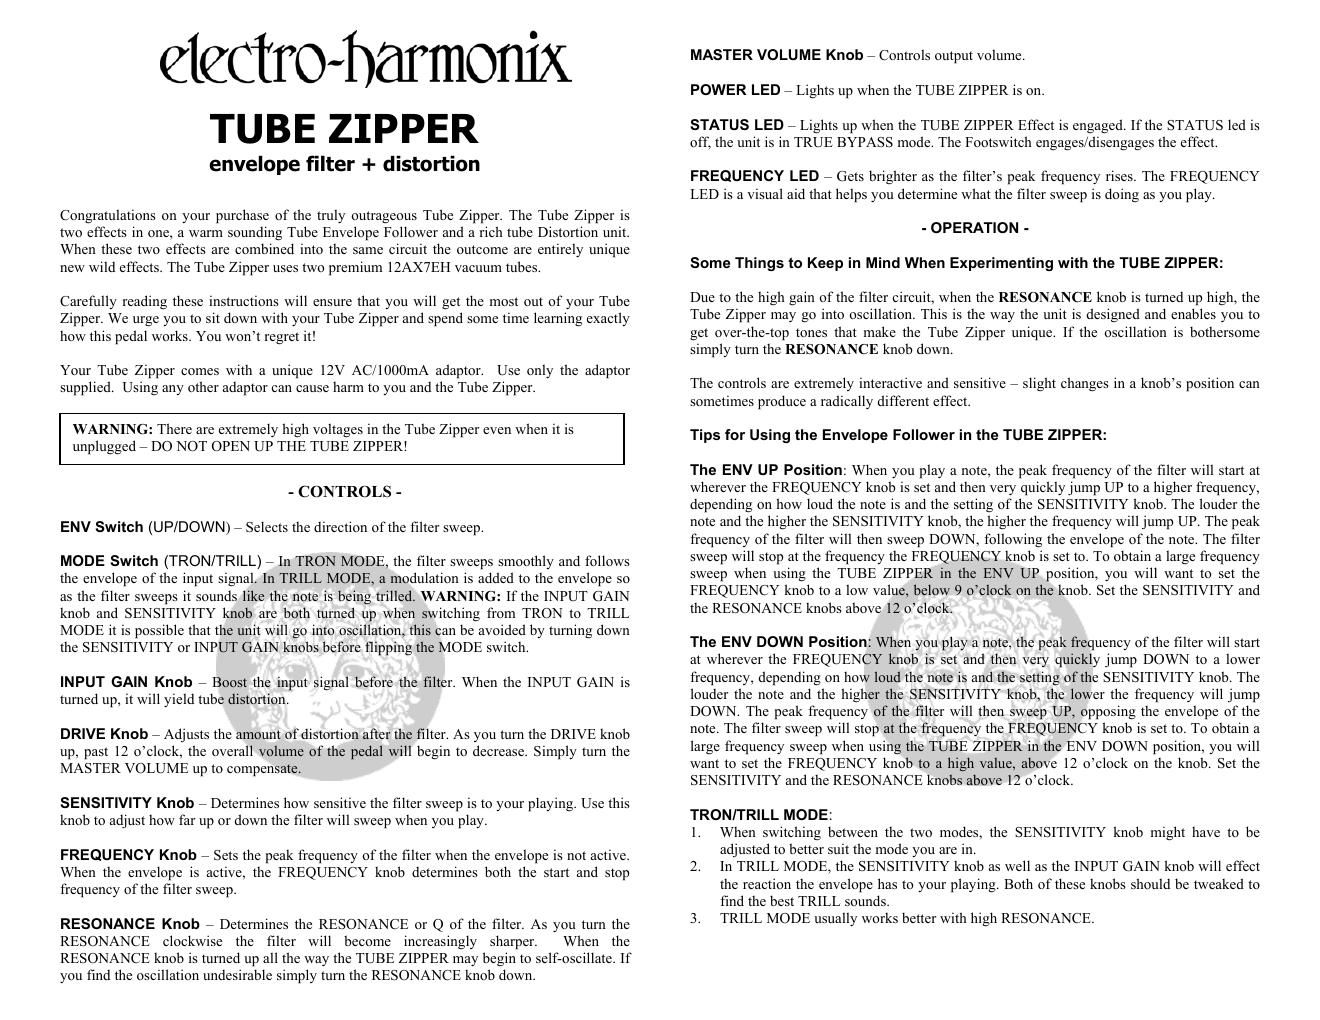 electro harmonix tube zipper manual